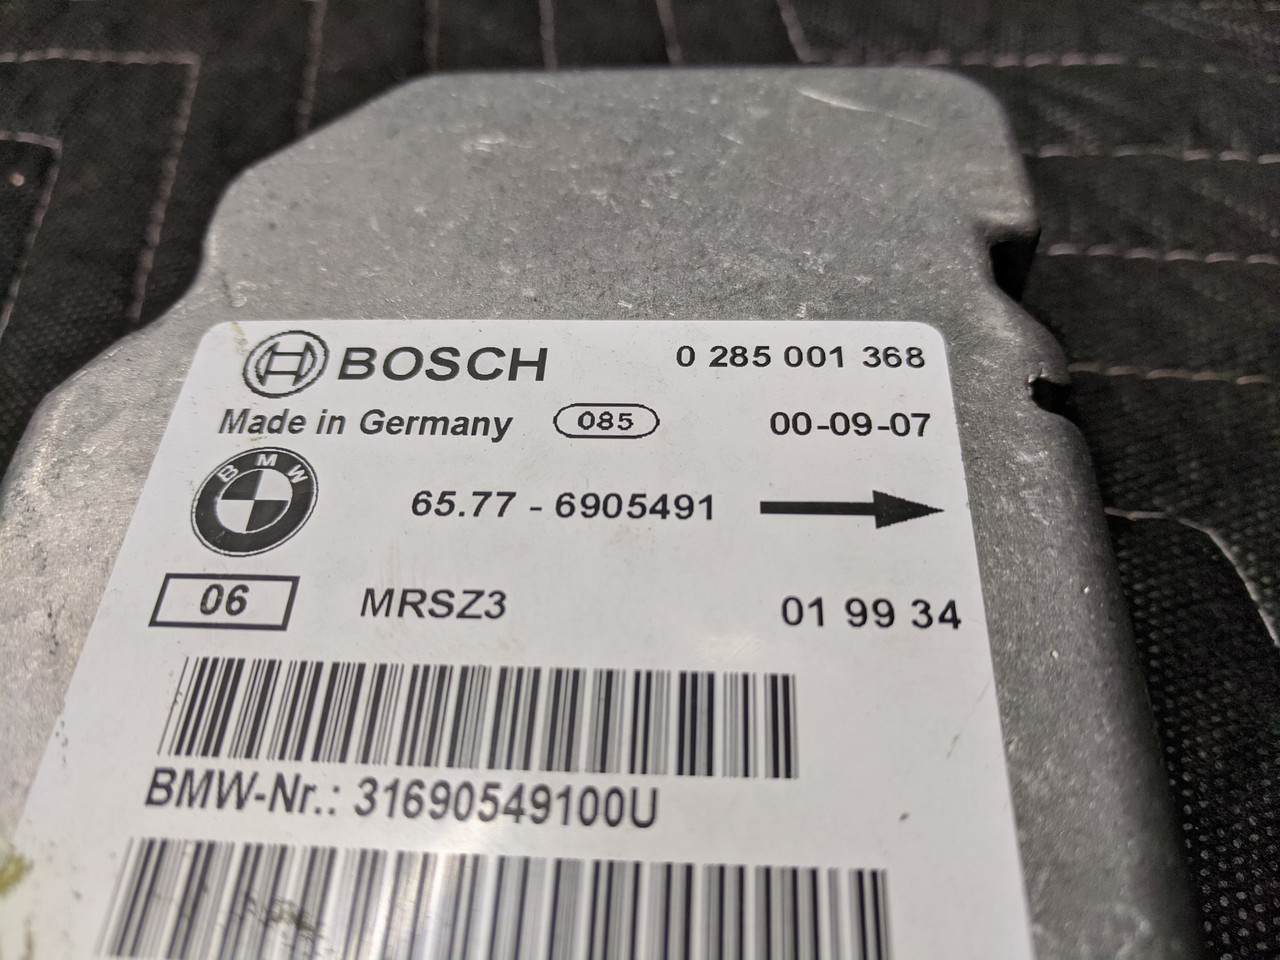 BMW E46 Airbag Control Module Bosch 65776905491